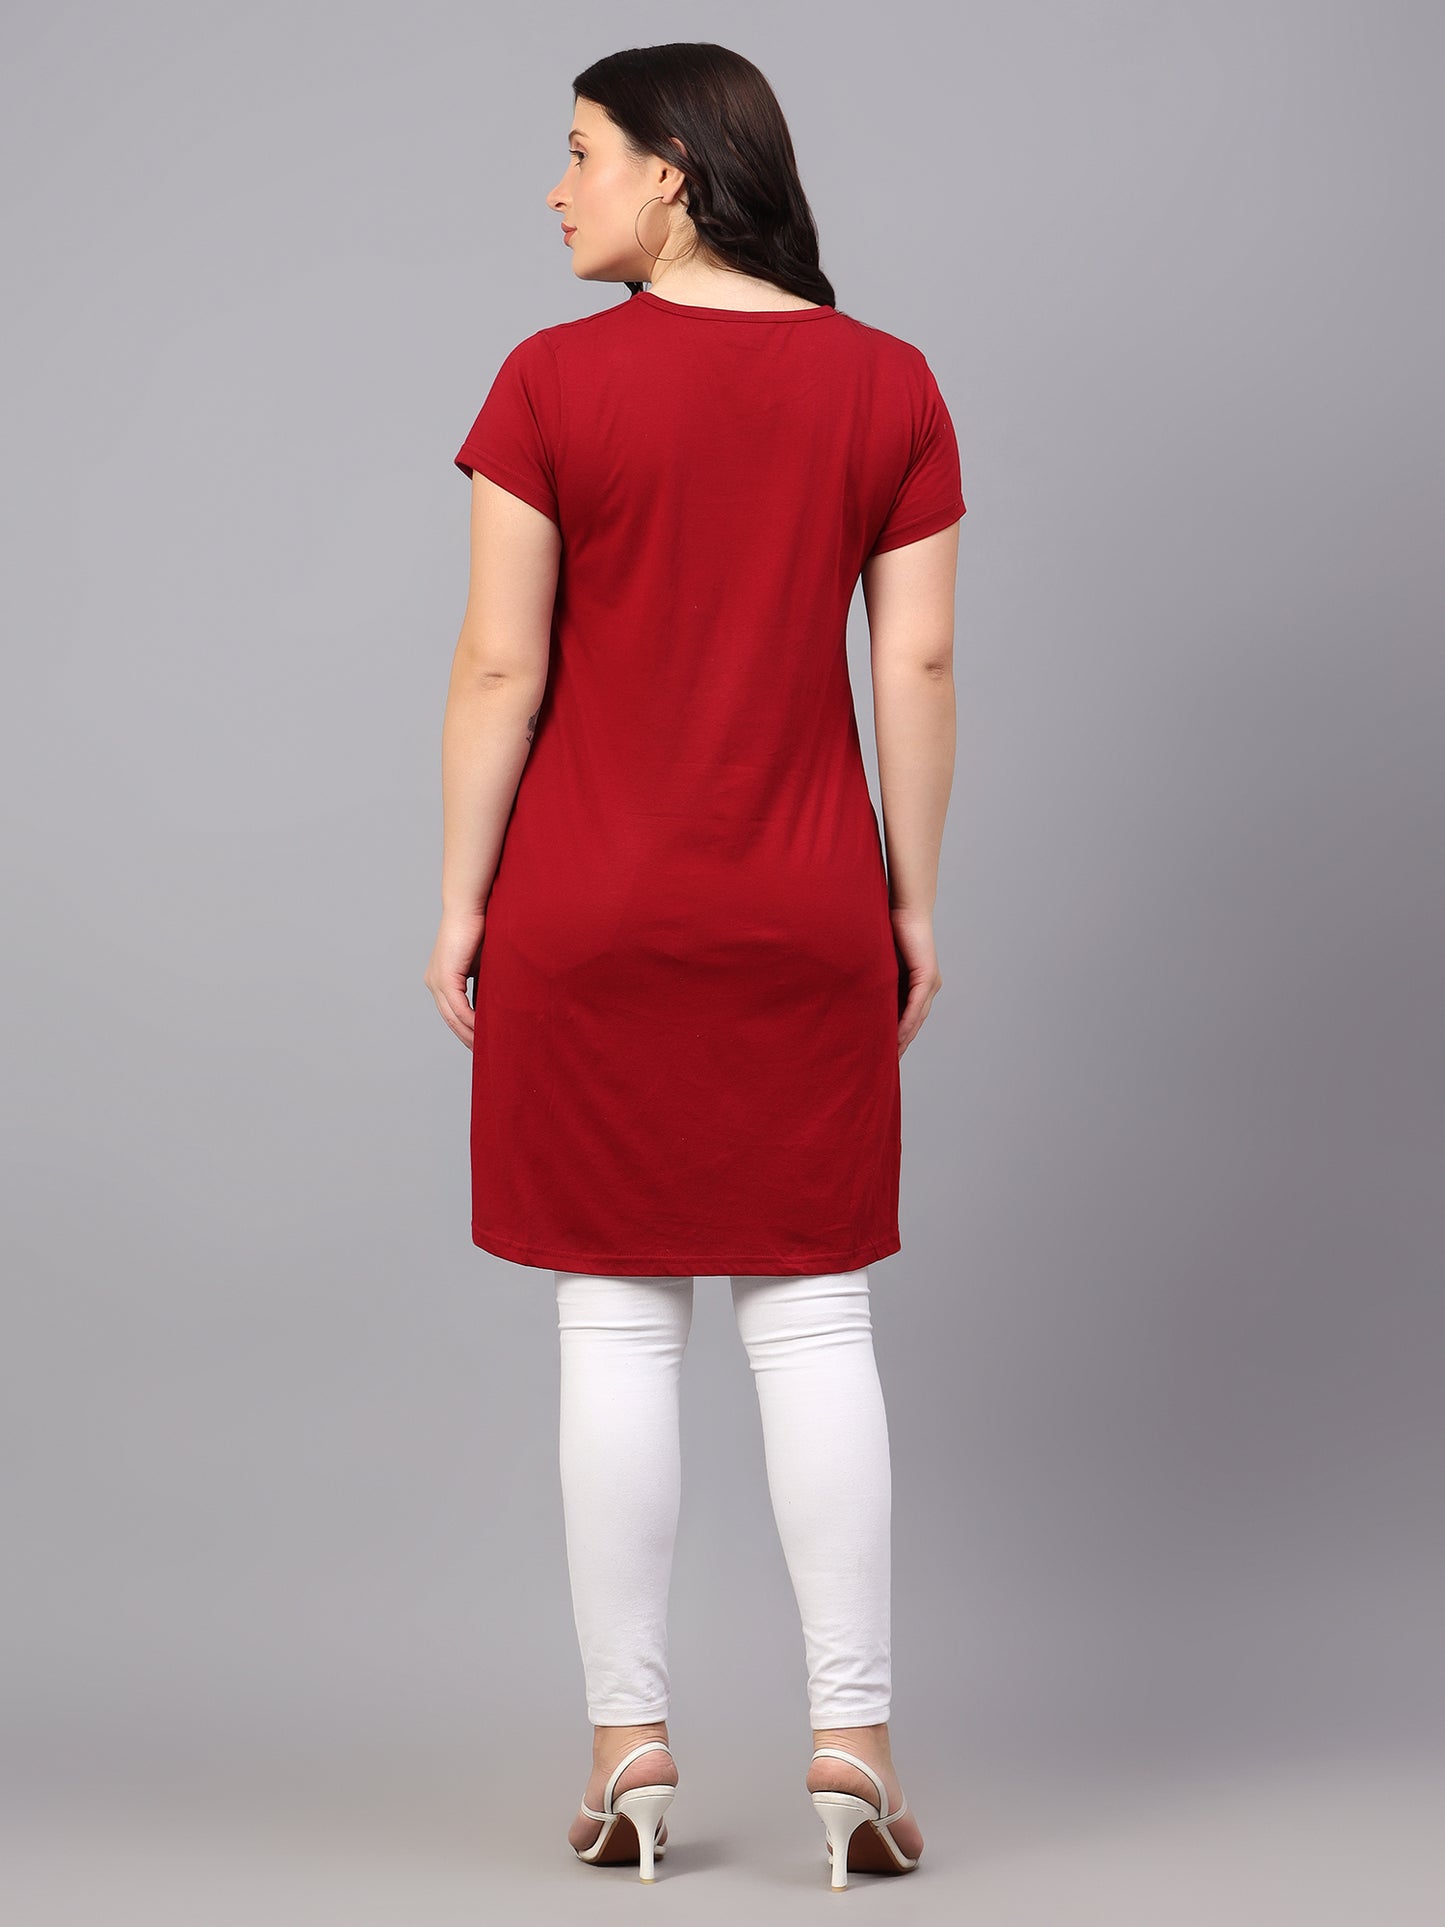 Women's Cotton Plain Round Neck Half Sleeve Long Top